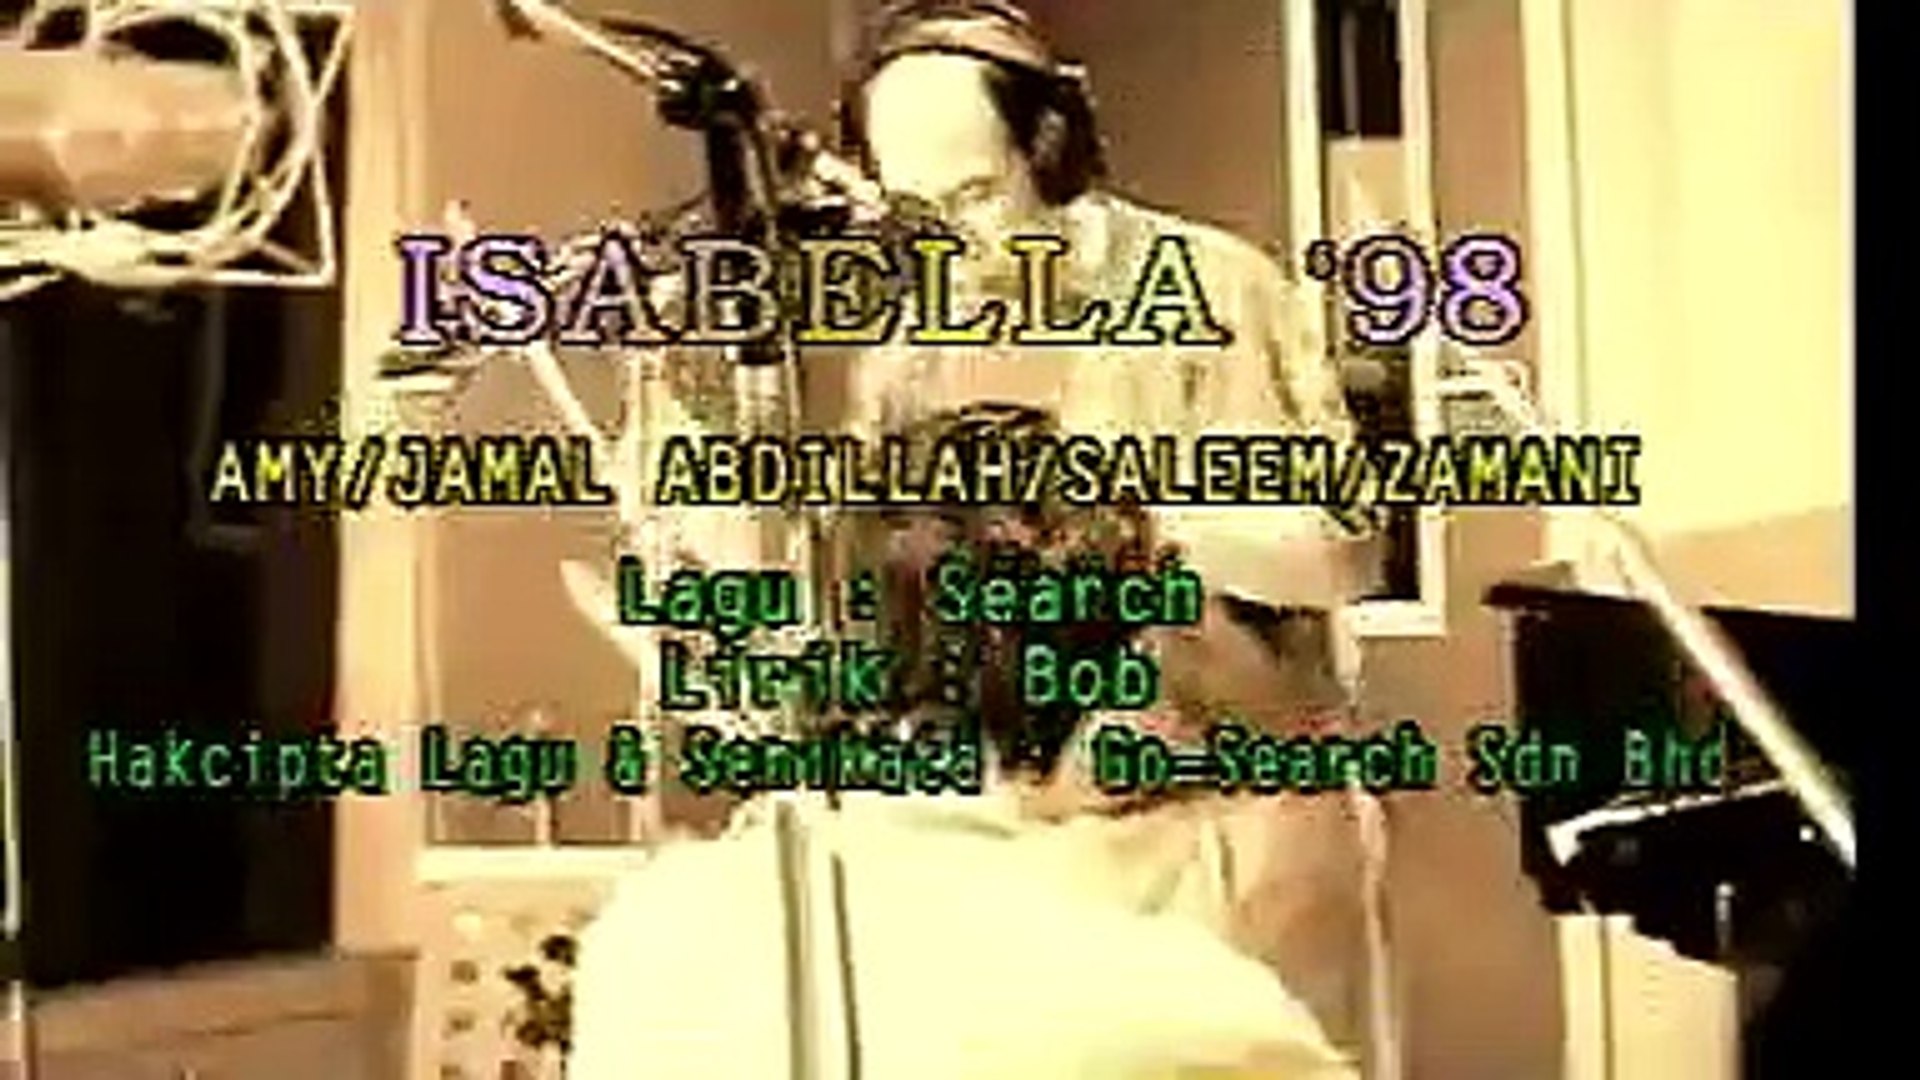 Isabella lirik